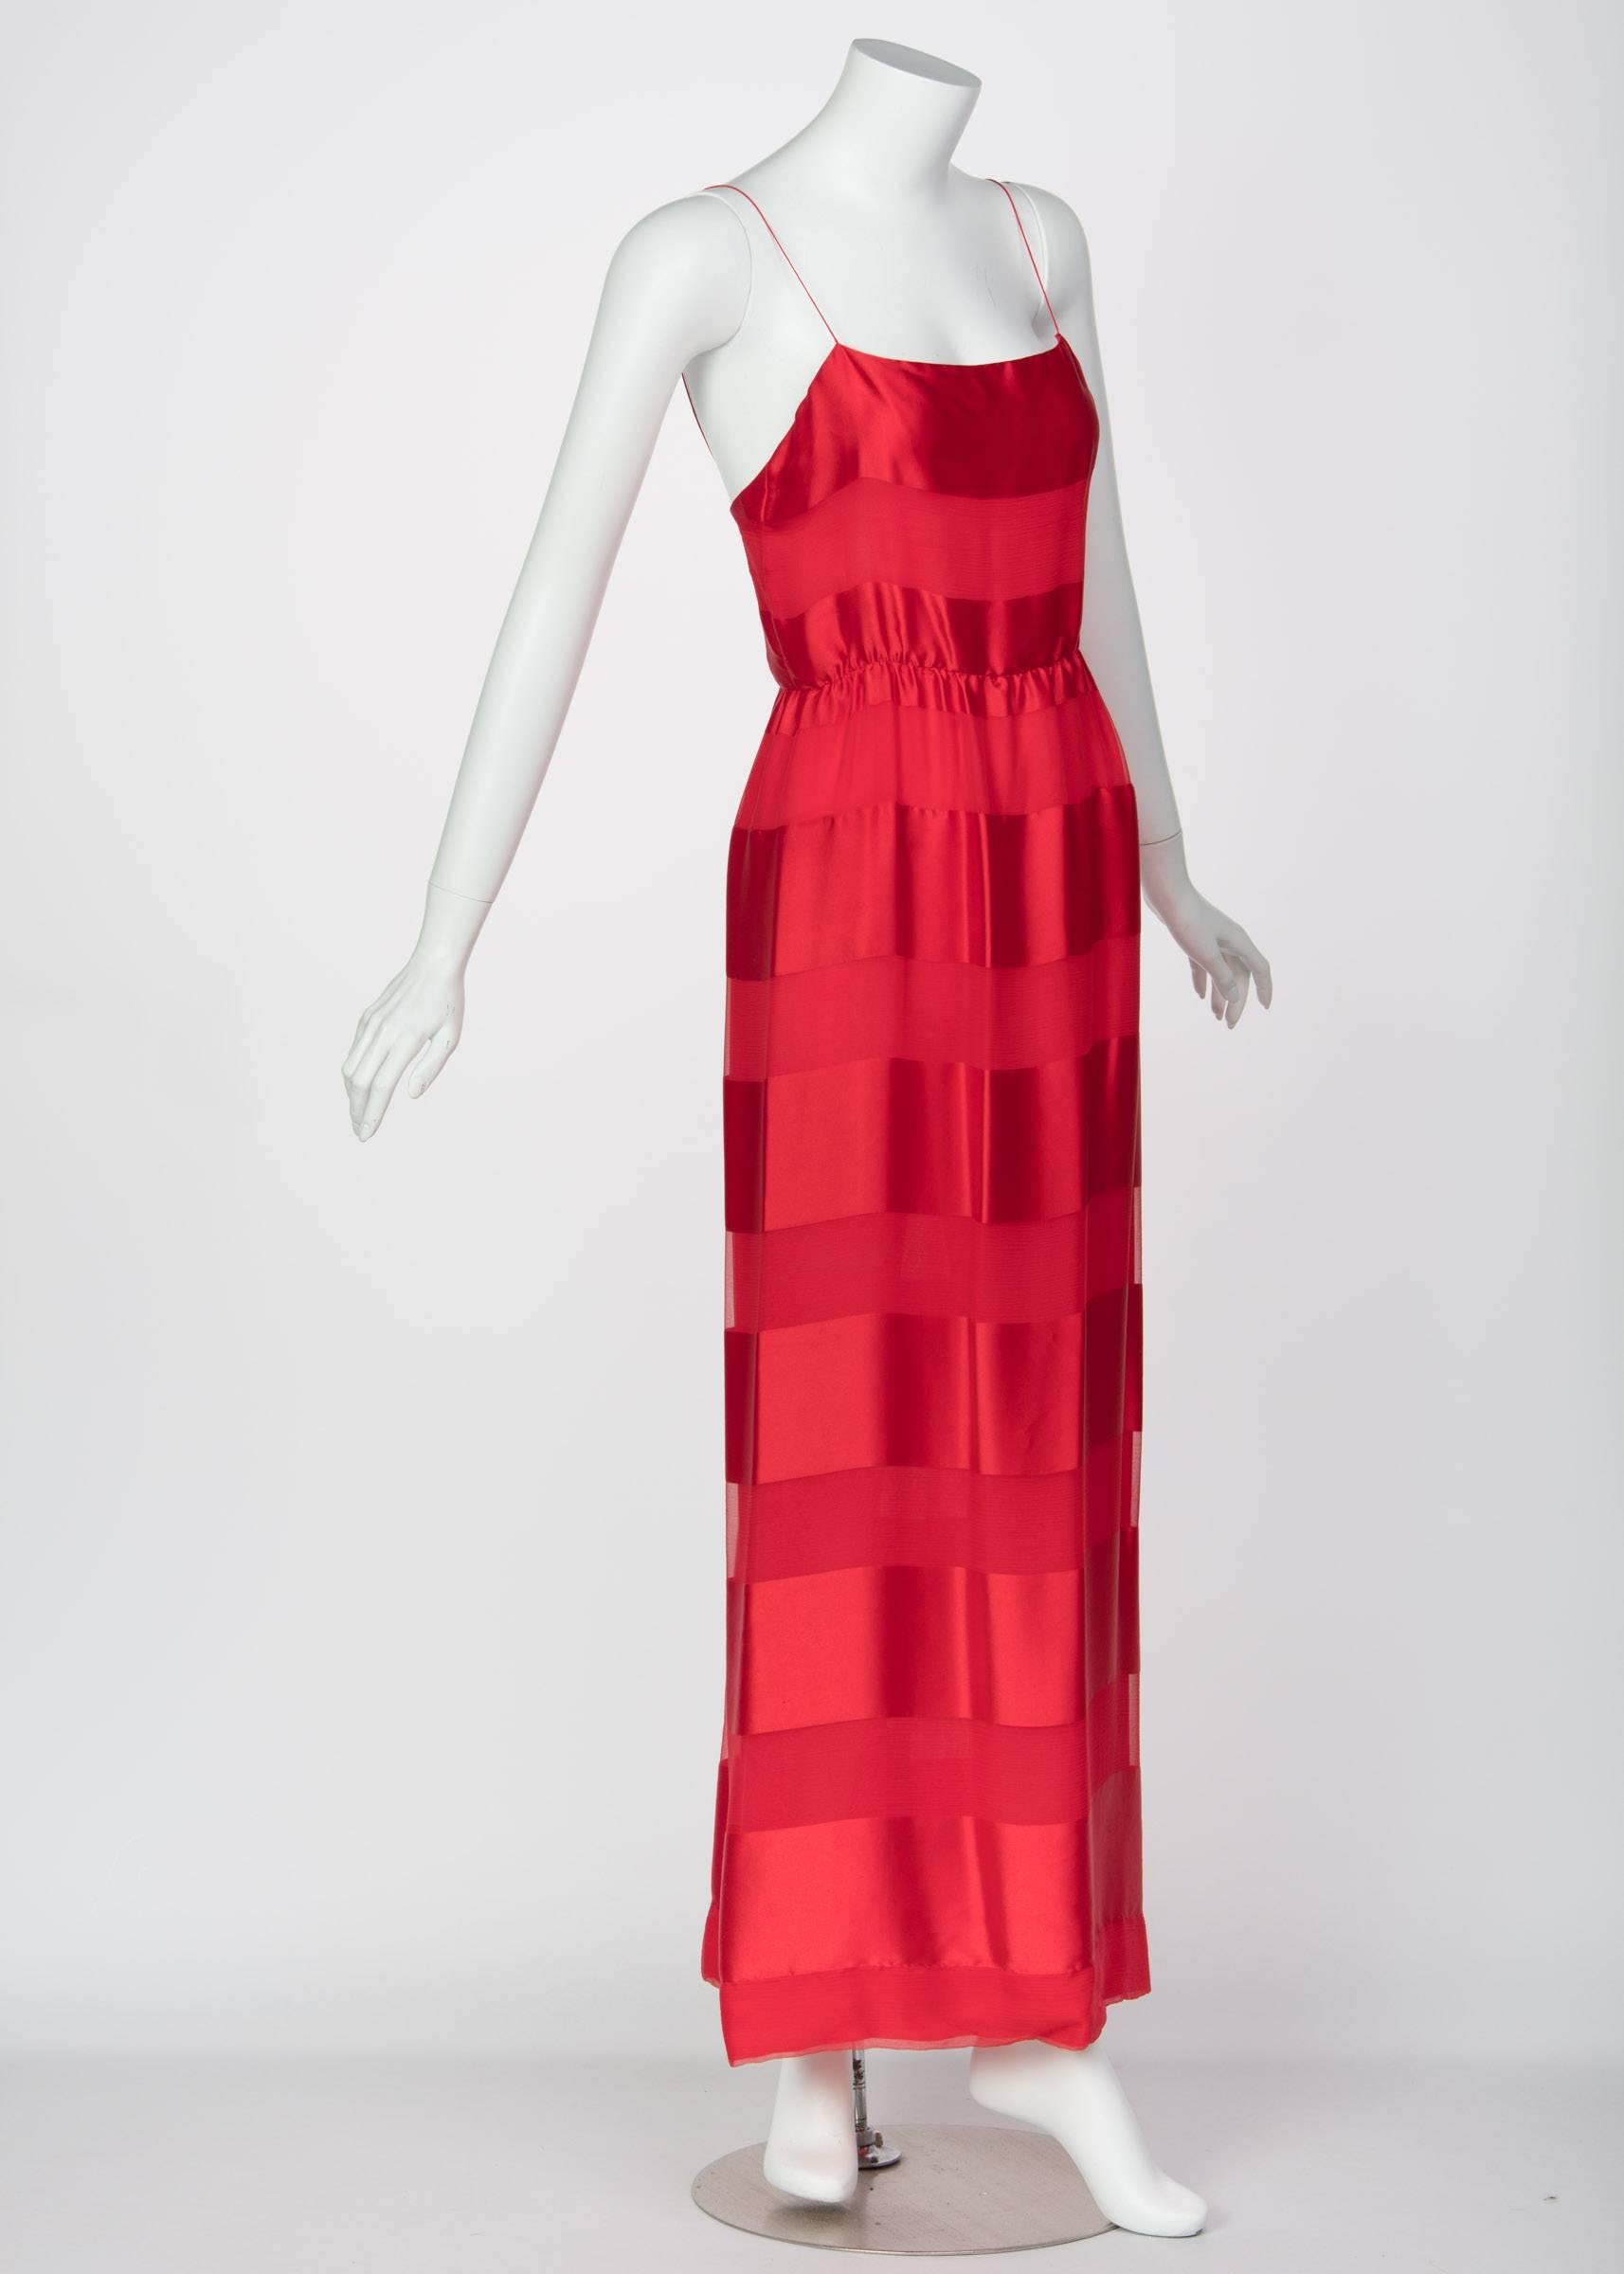 Bill Blass Red Silk Sheer Striped Maxi Column Dress Draped Overlay, 1970s  2